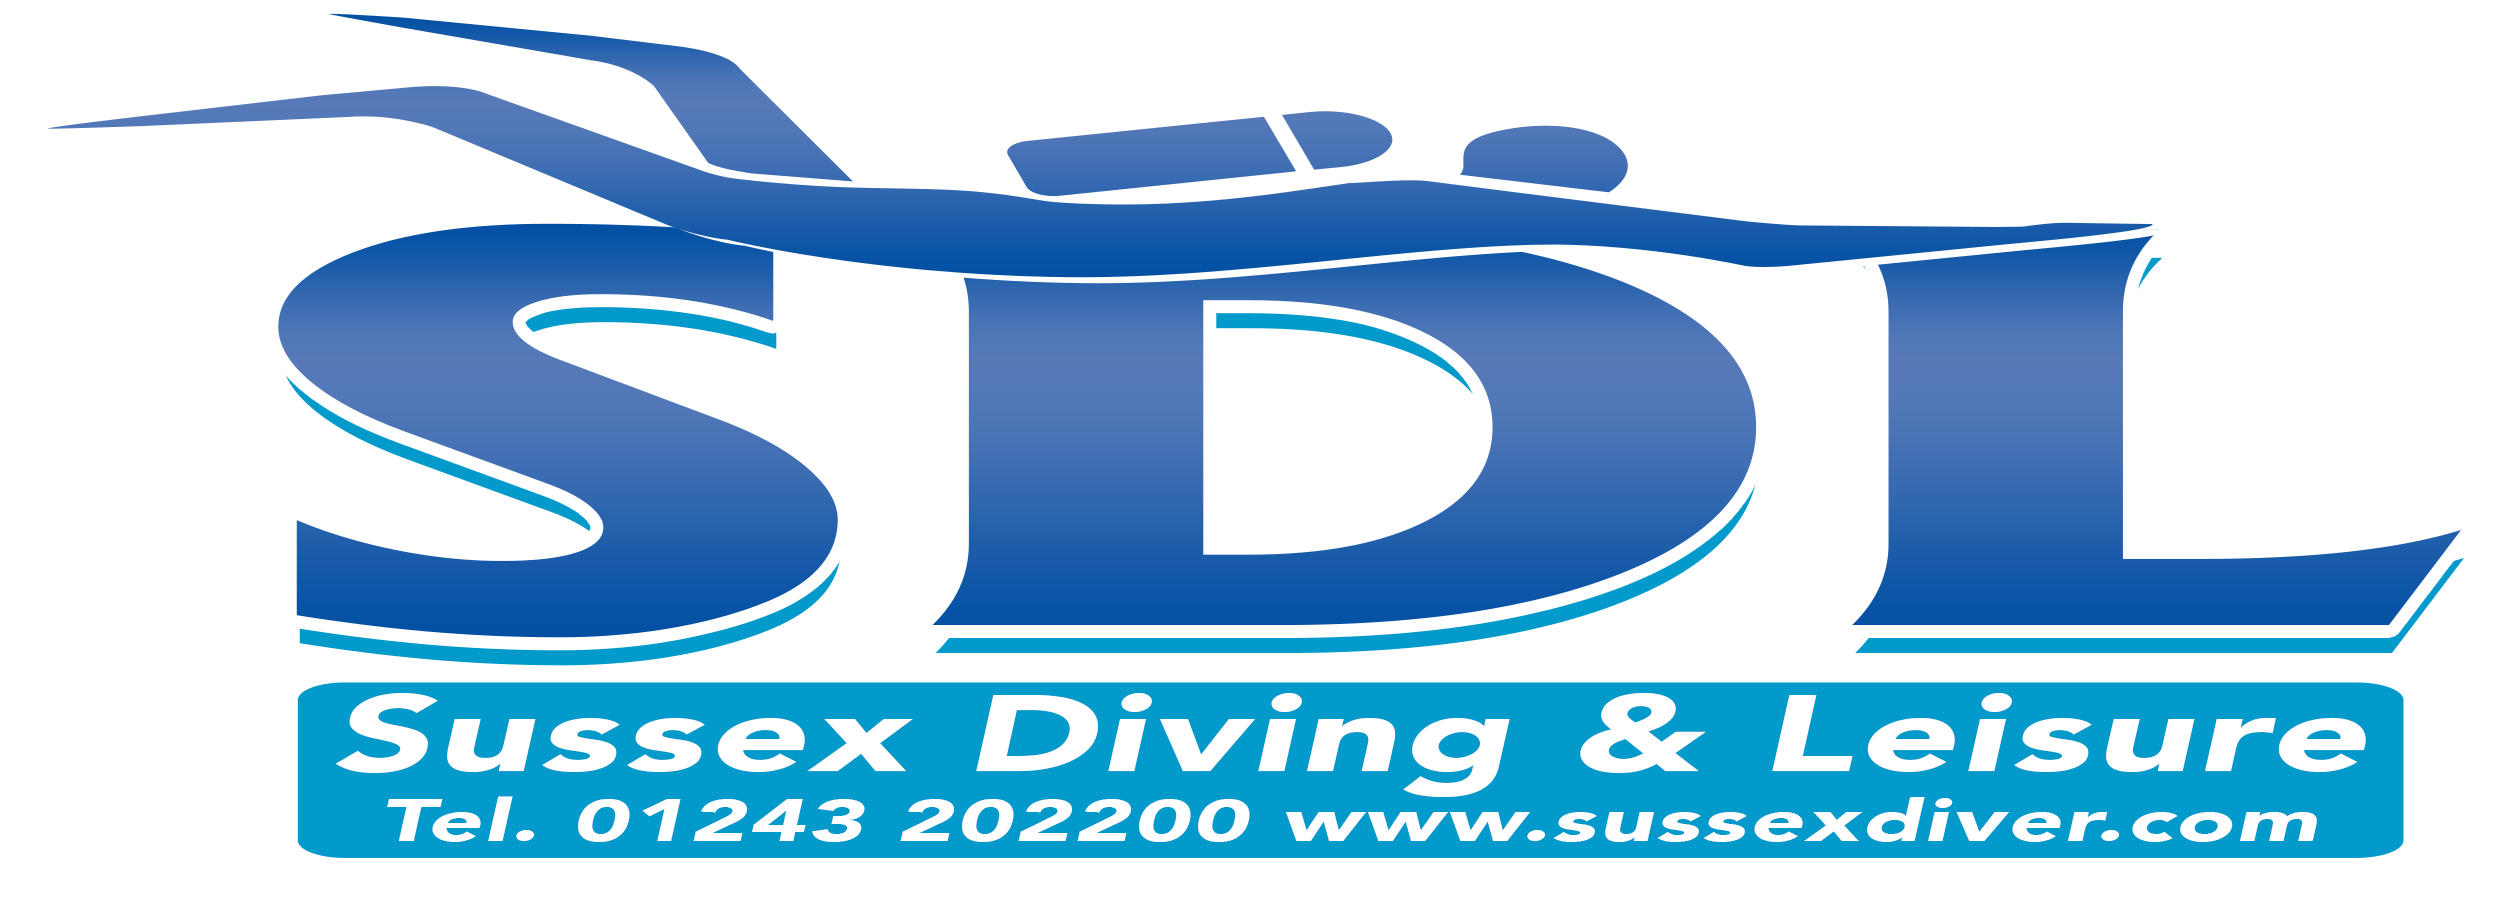 Sussex Diving & Leisure